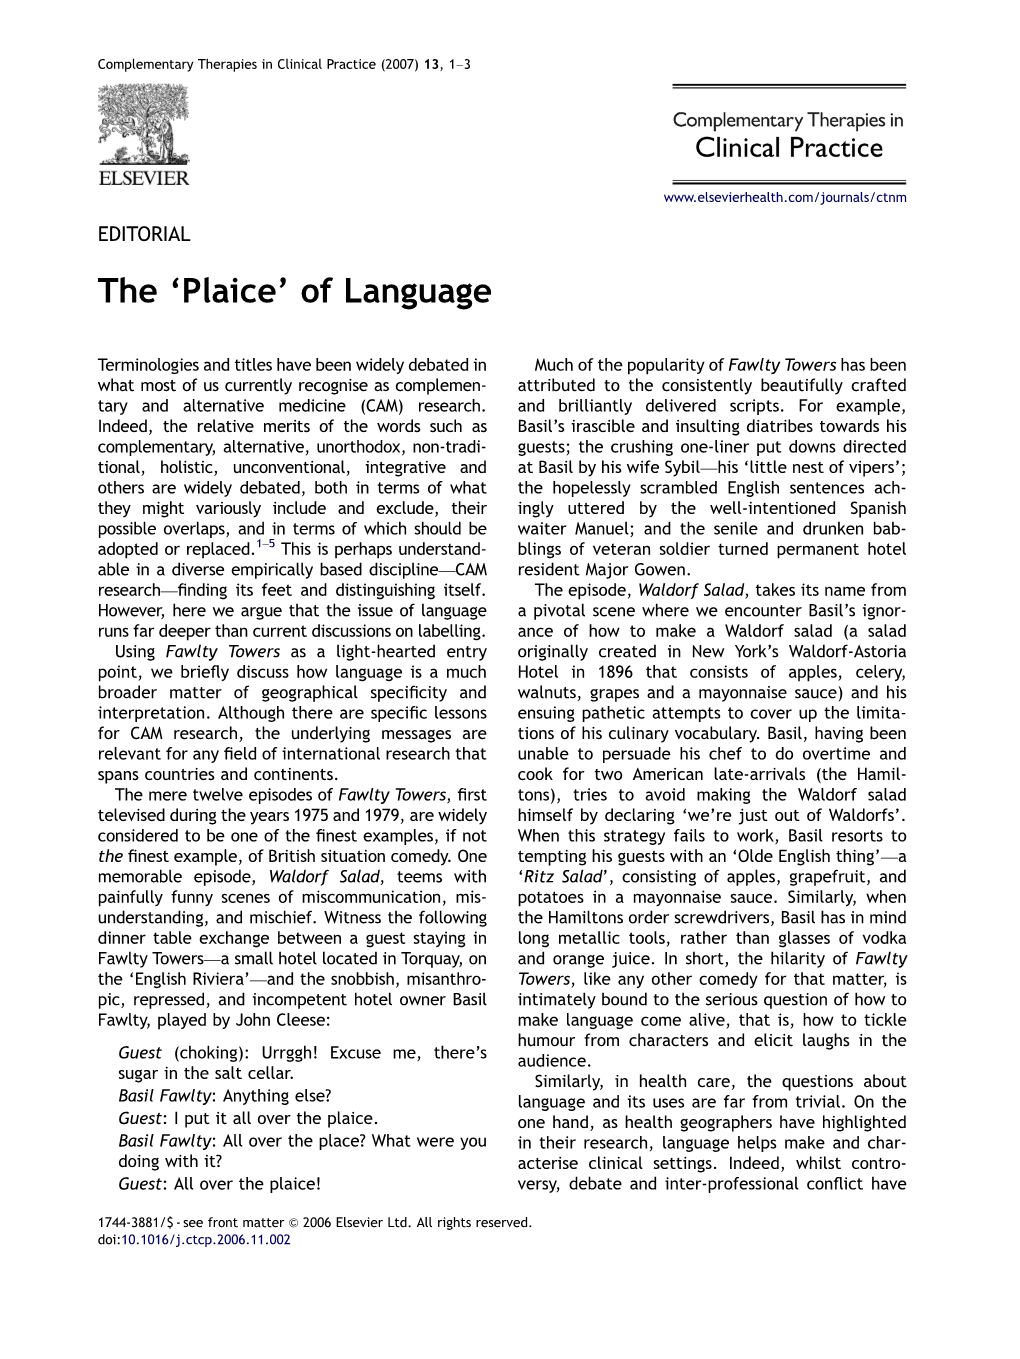 The 'Plaice' of Language